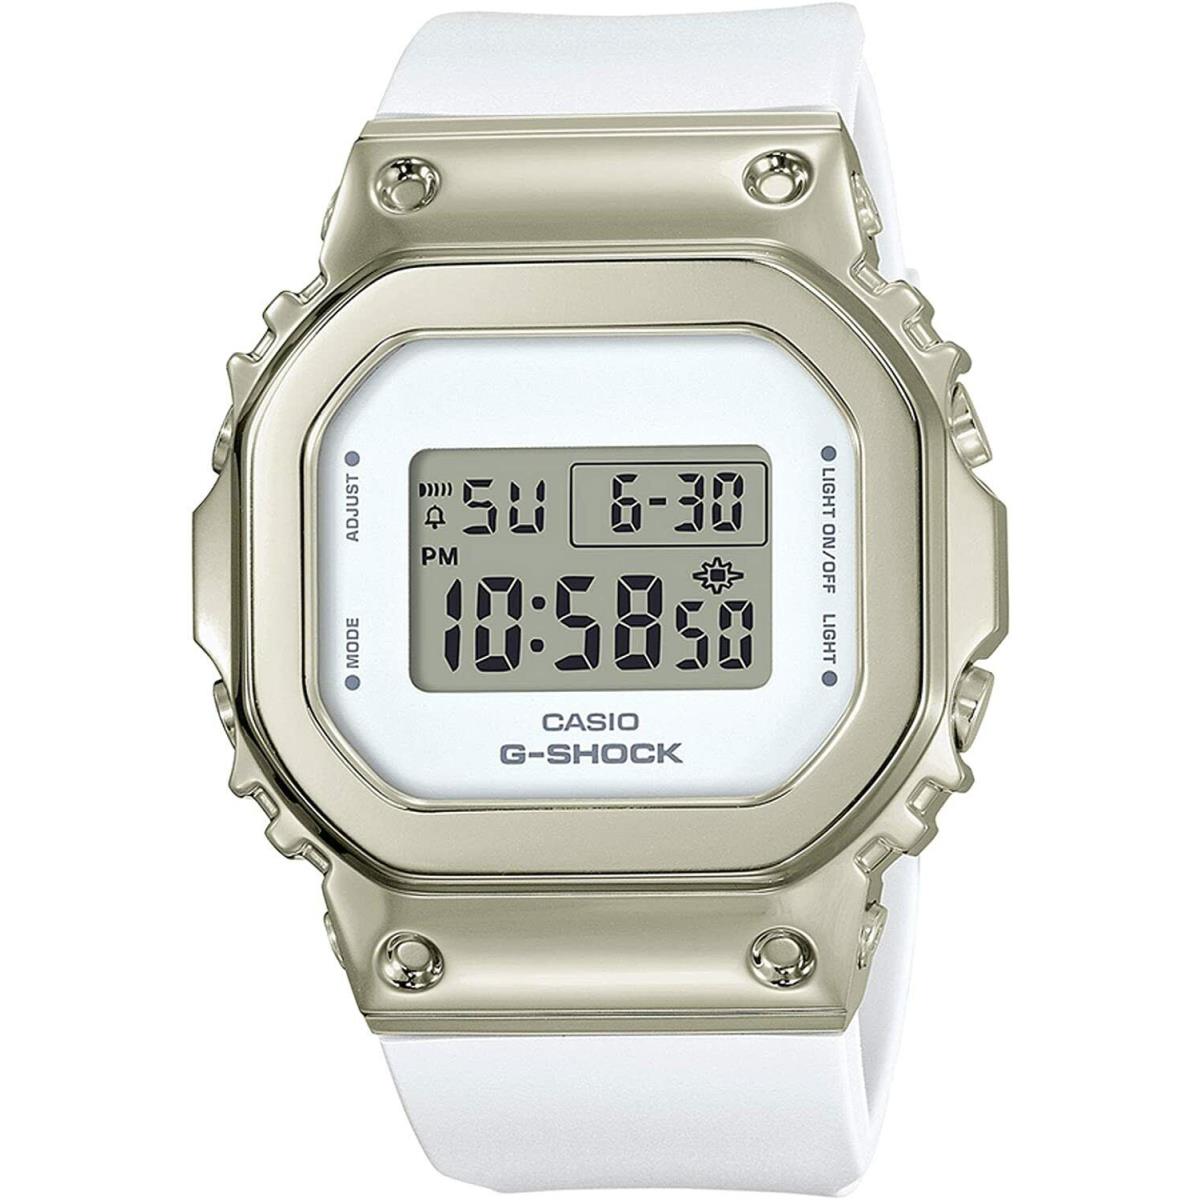 Casio G-shock Square Digital Watch White Resin GMS-5600G-7 / GMS5600G-7